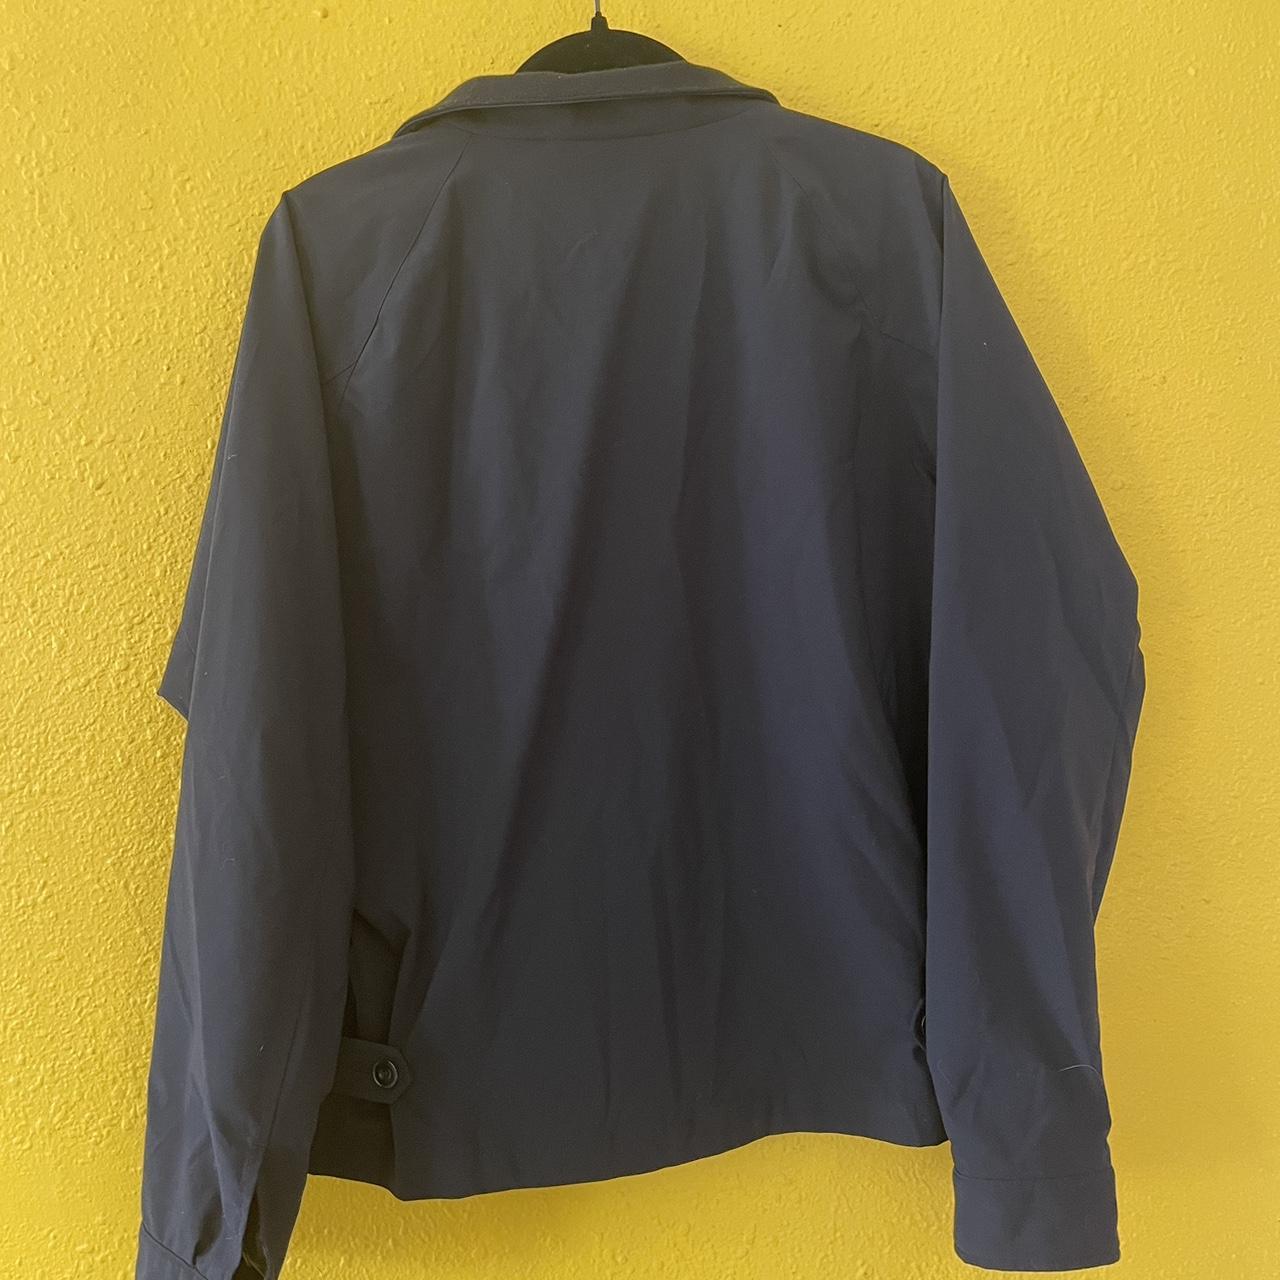 UNIQLO Men's Black Jacket | Depop